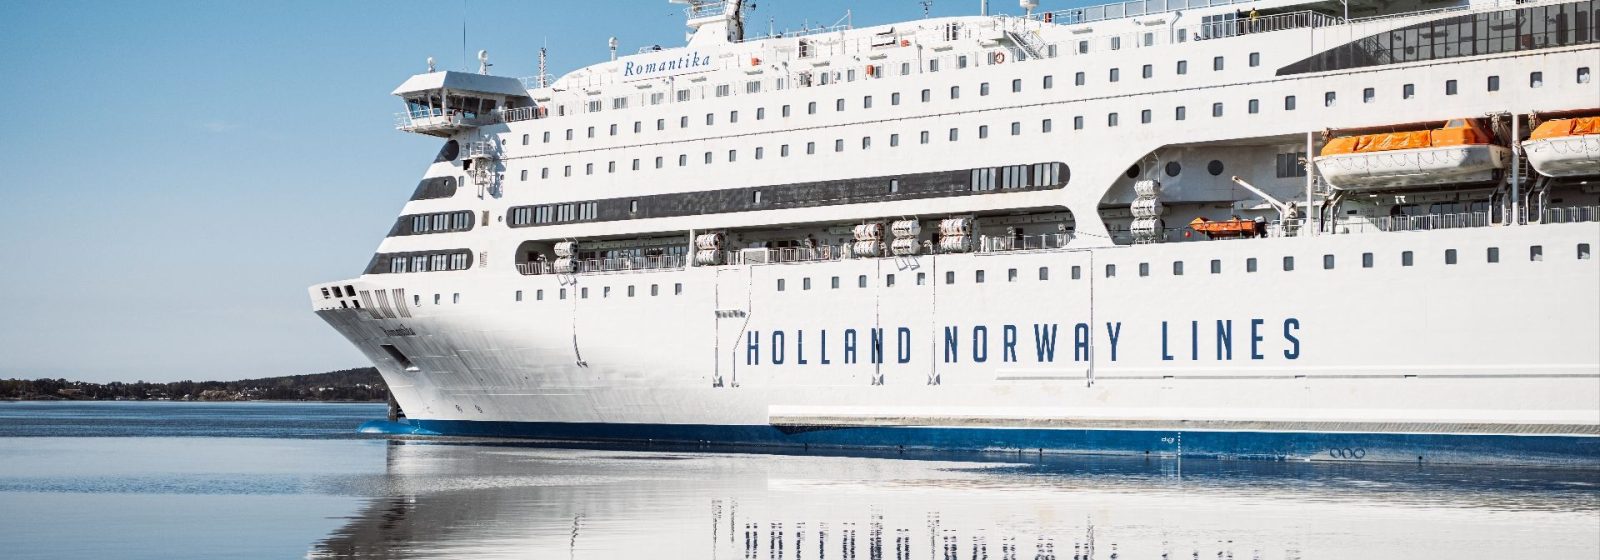 'MS Romantika' van Holland Norway Lines